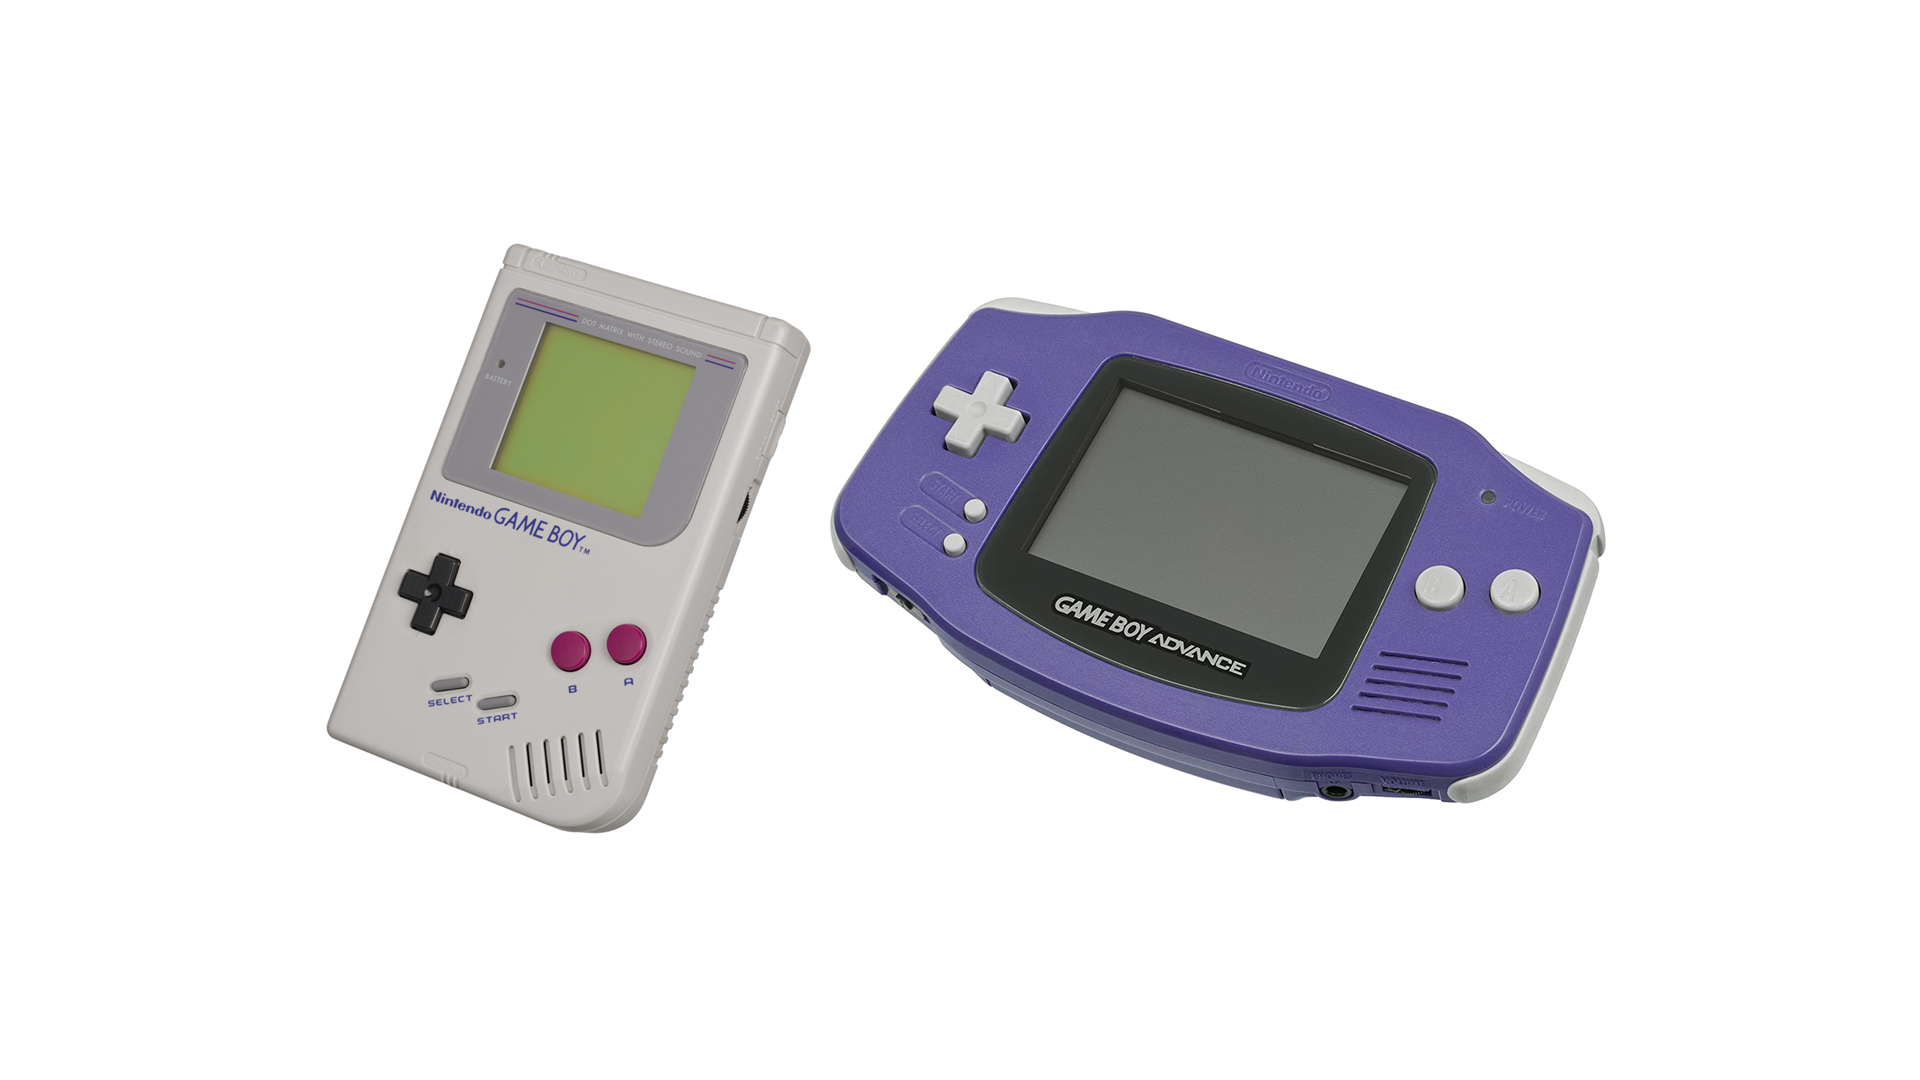 Game Boy and Game Boy Advance emulators on Switch